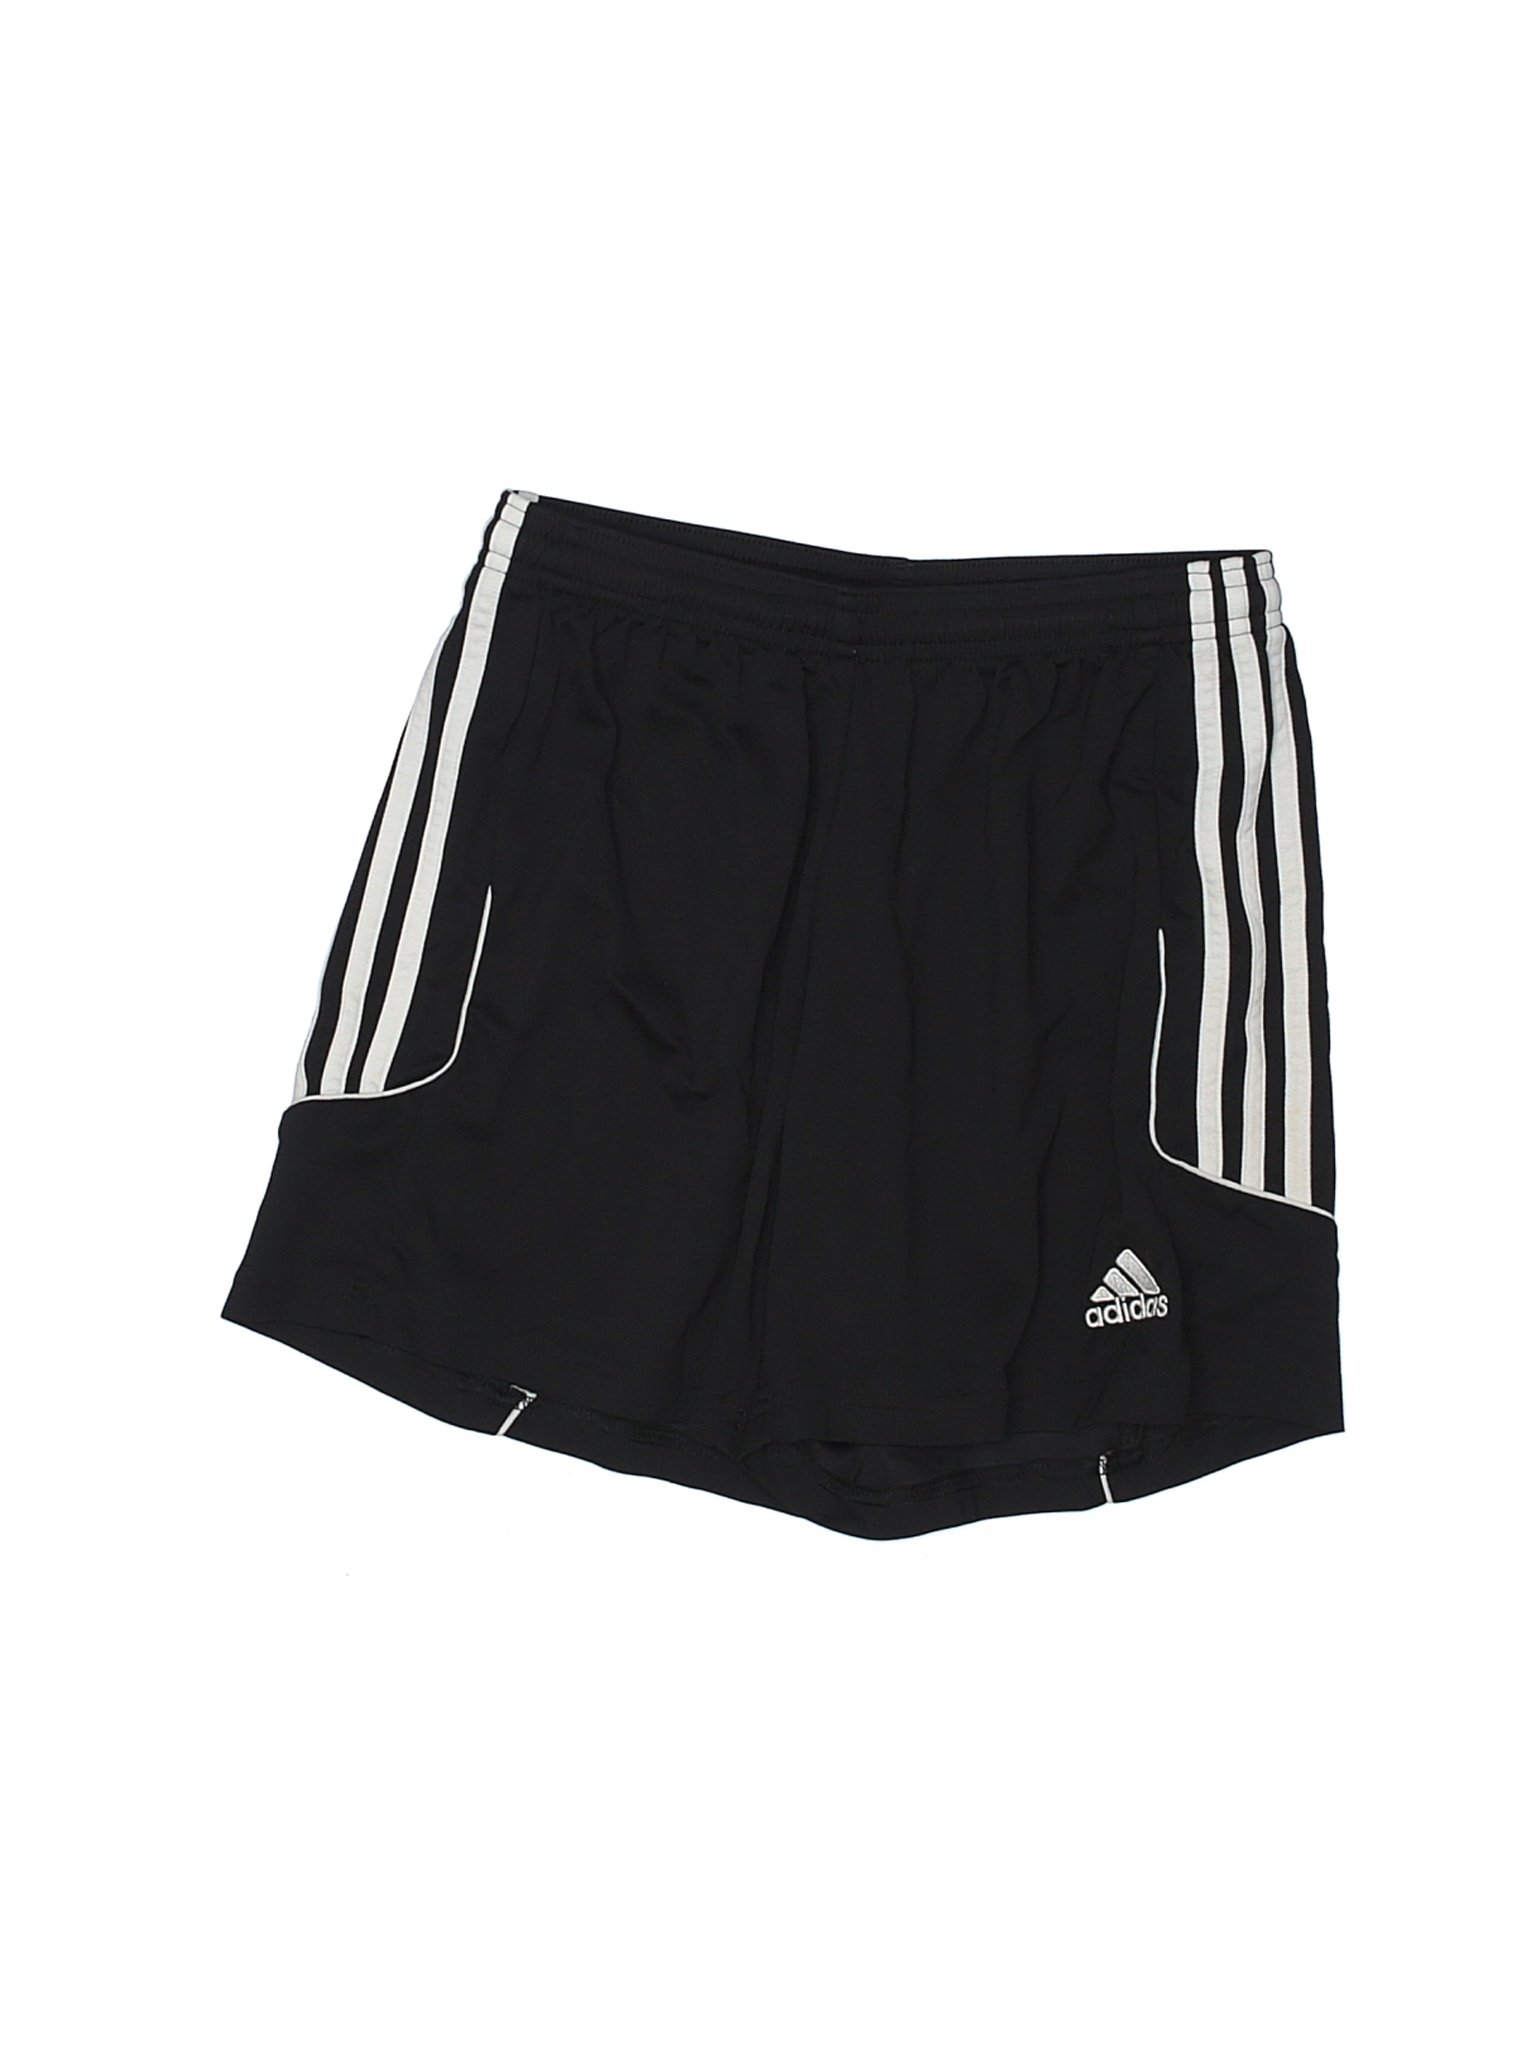 Adidas Women Black Athletic Shorts S | eBay